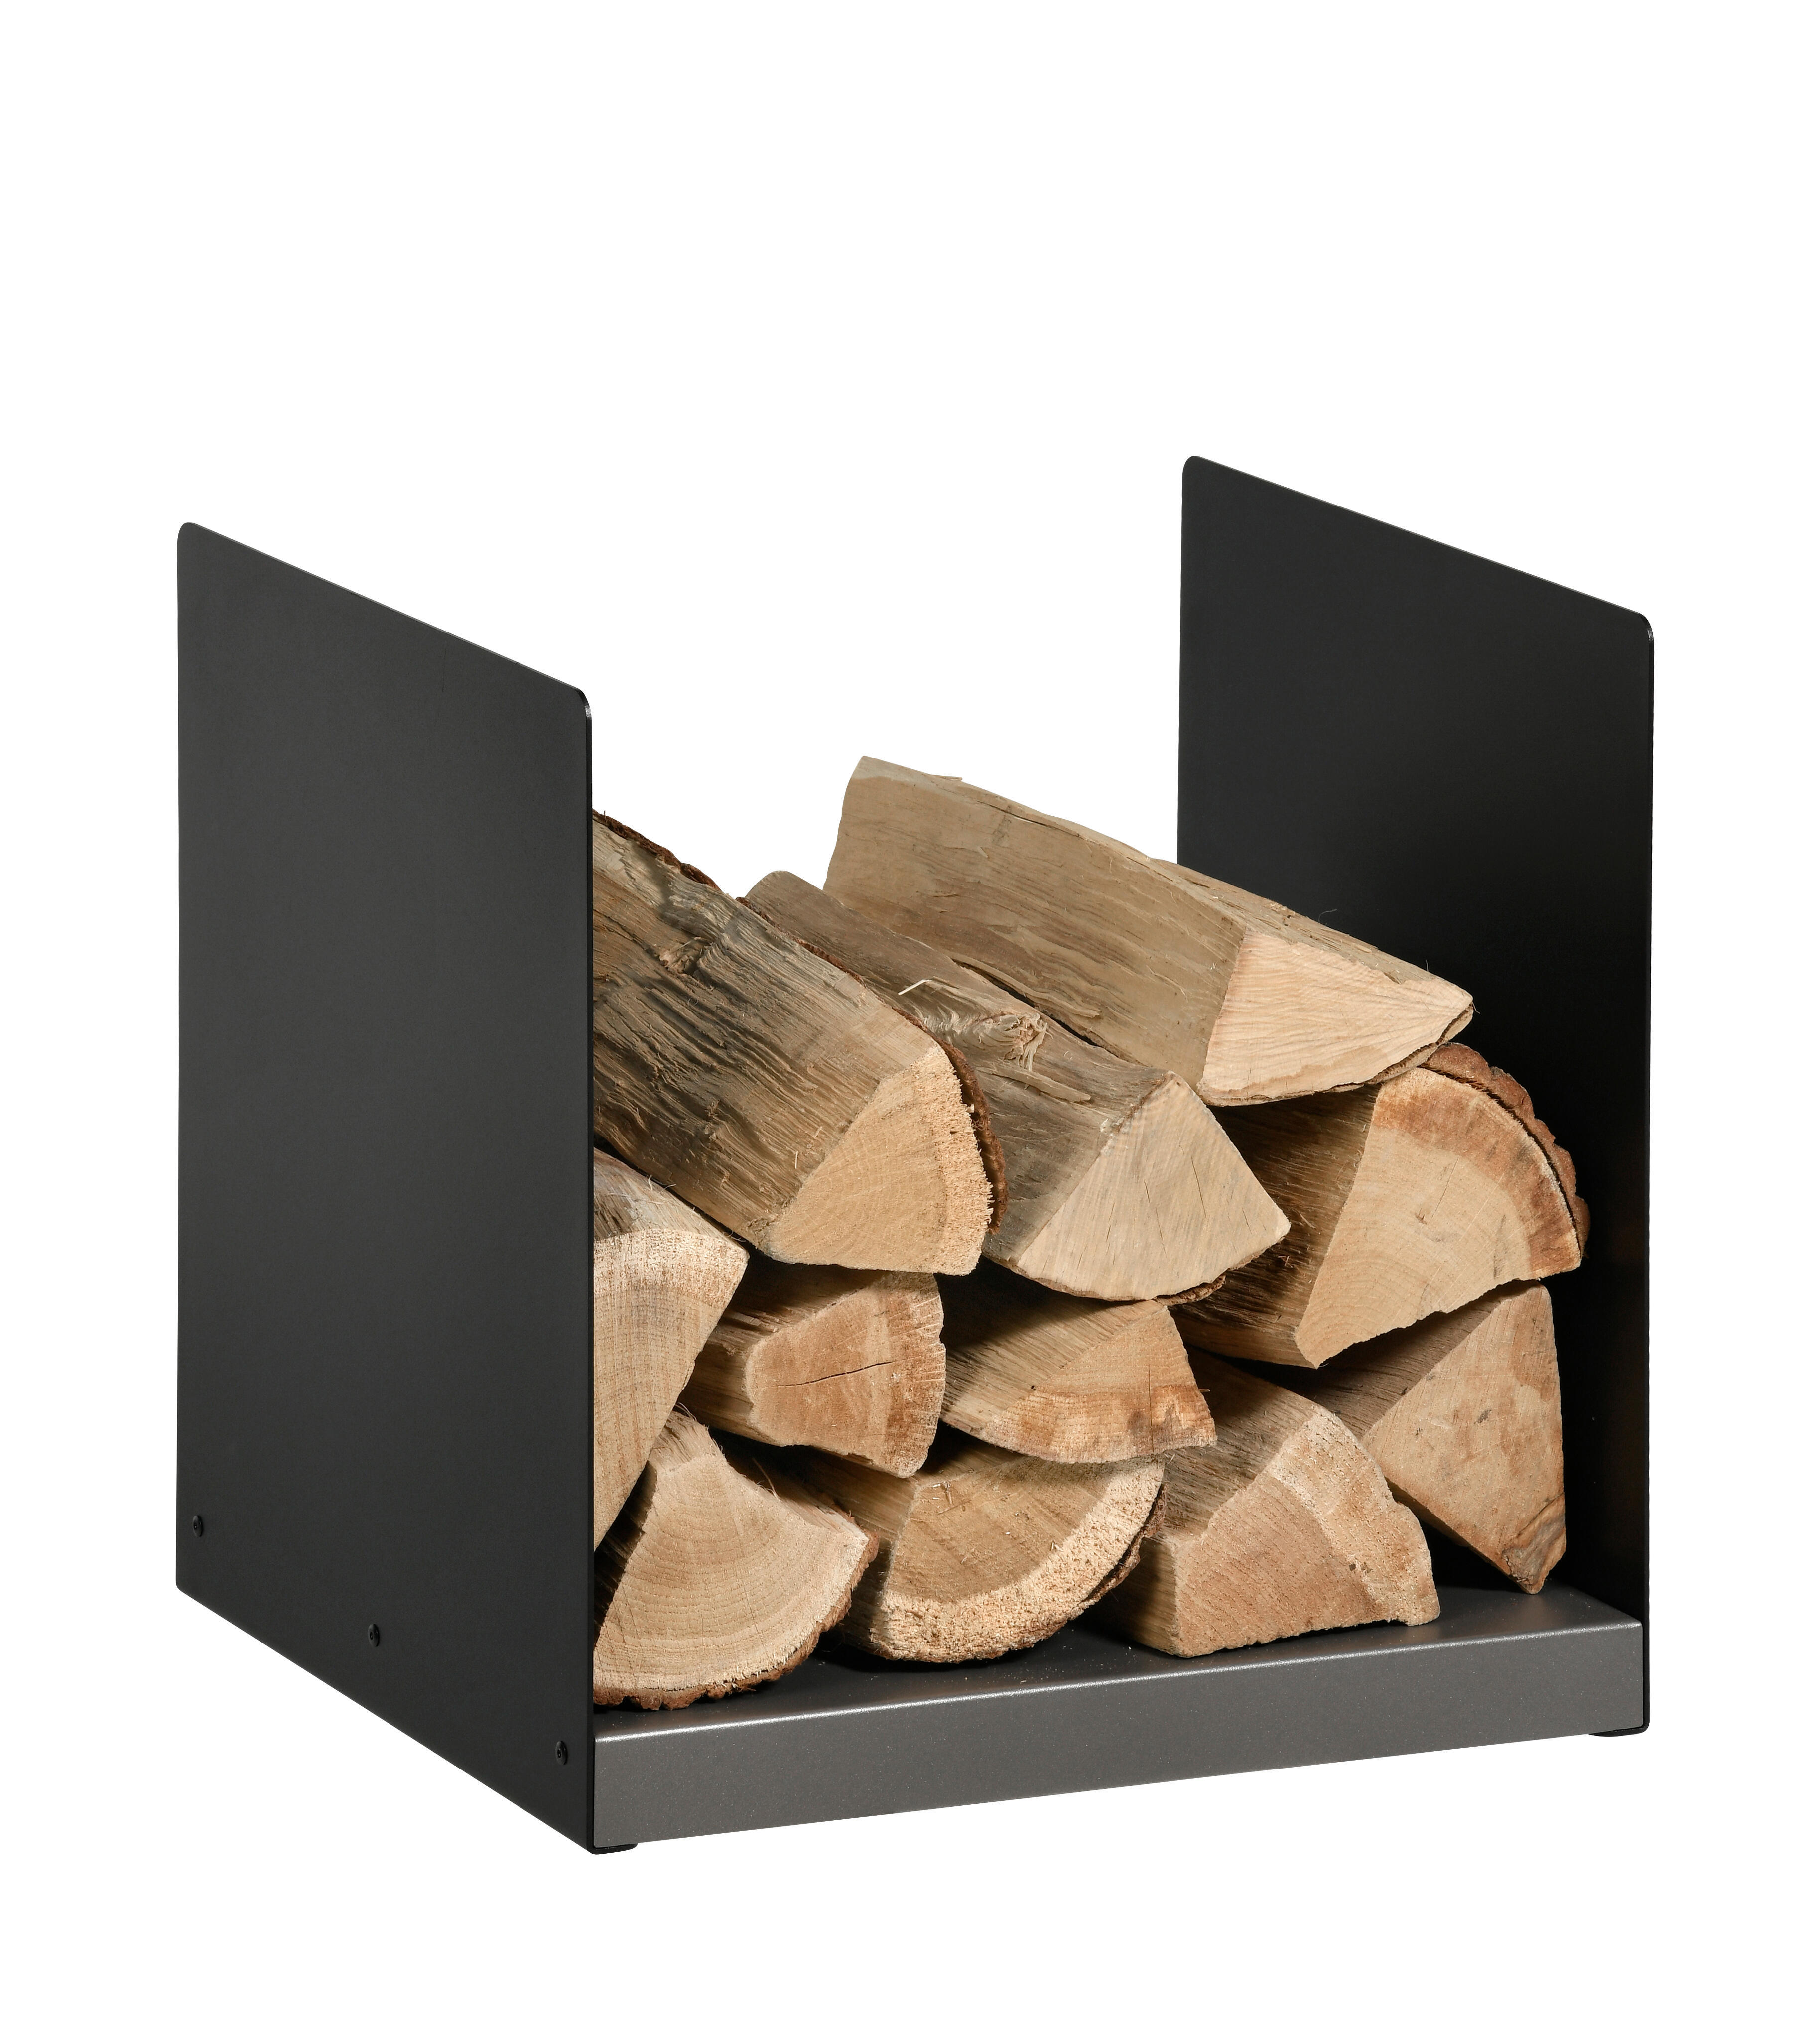 Bûches de bois de chauffage 31cm - Flamino